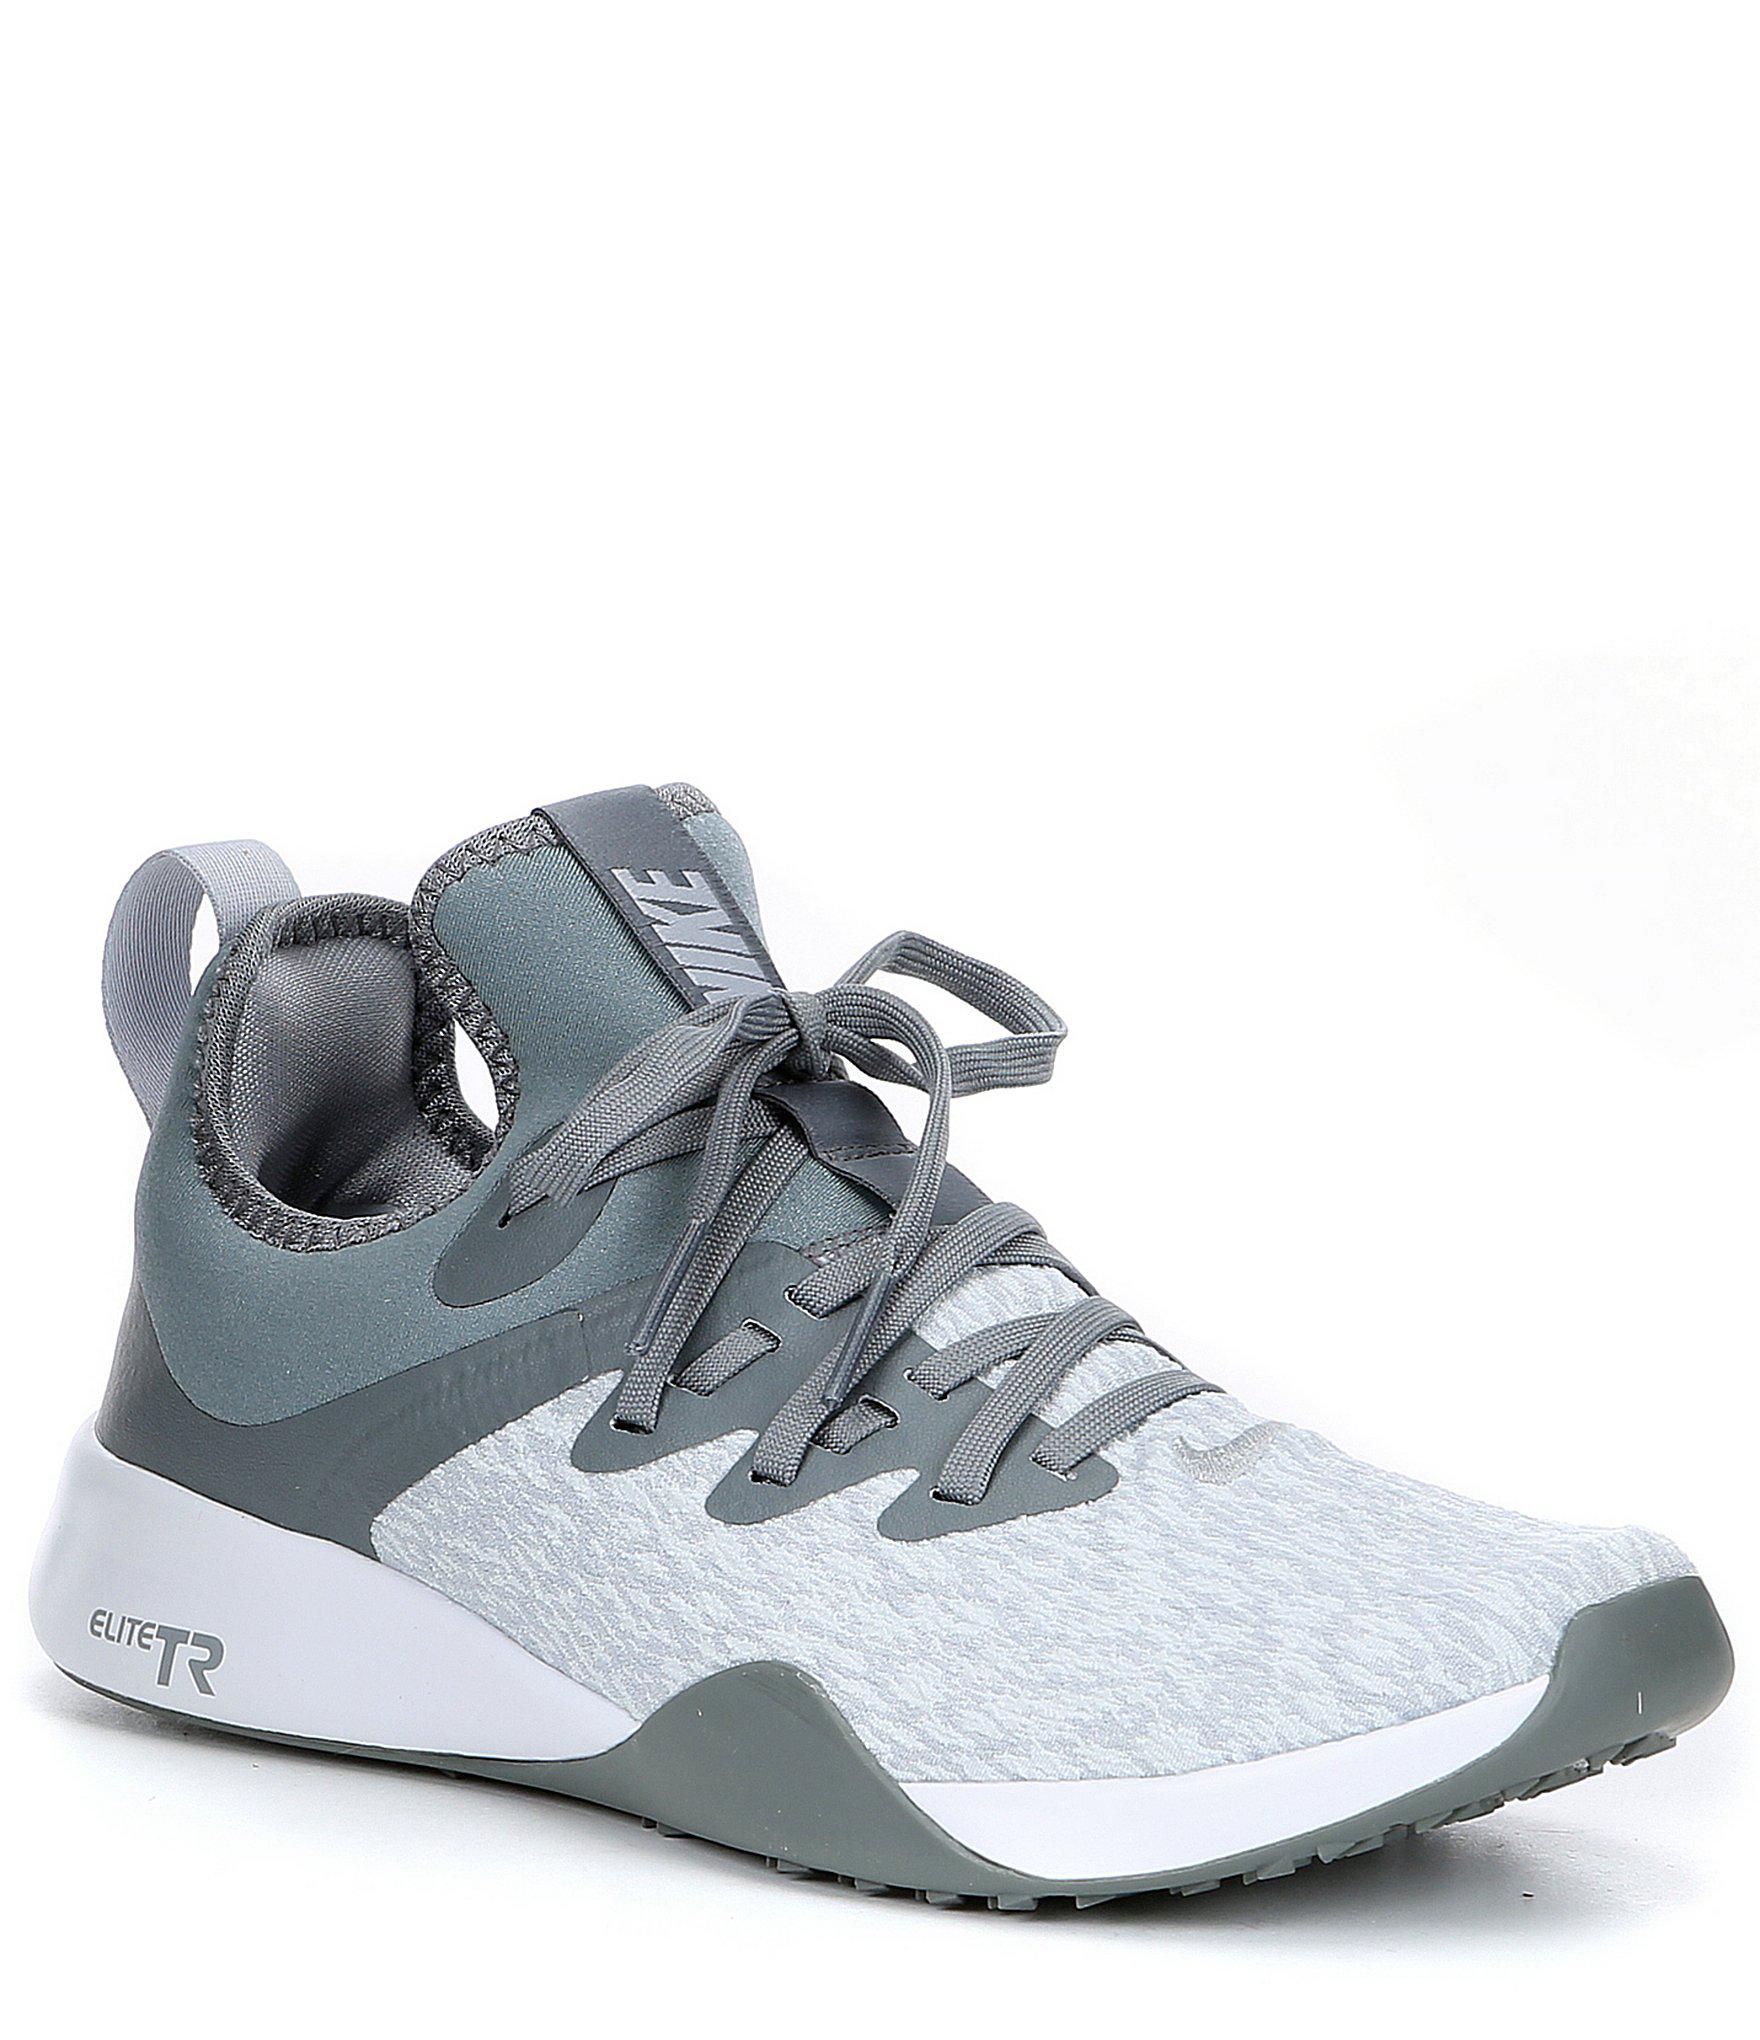 Nike Women S Foundation Elite Tr Training Shoe In Cool Grey Gray